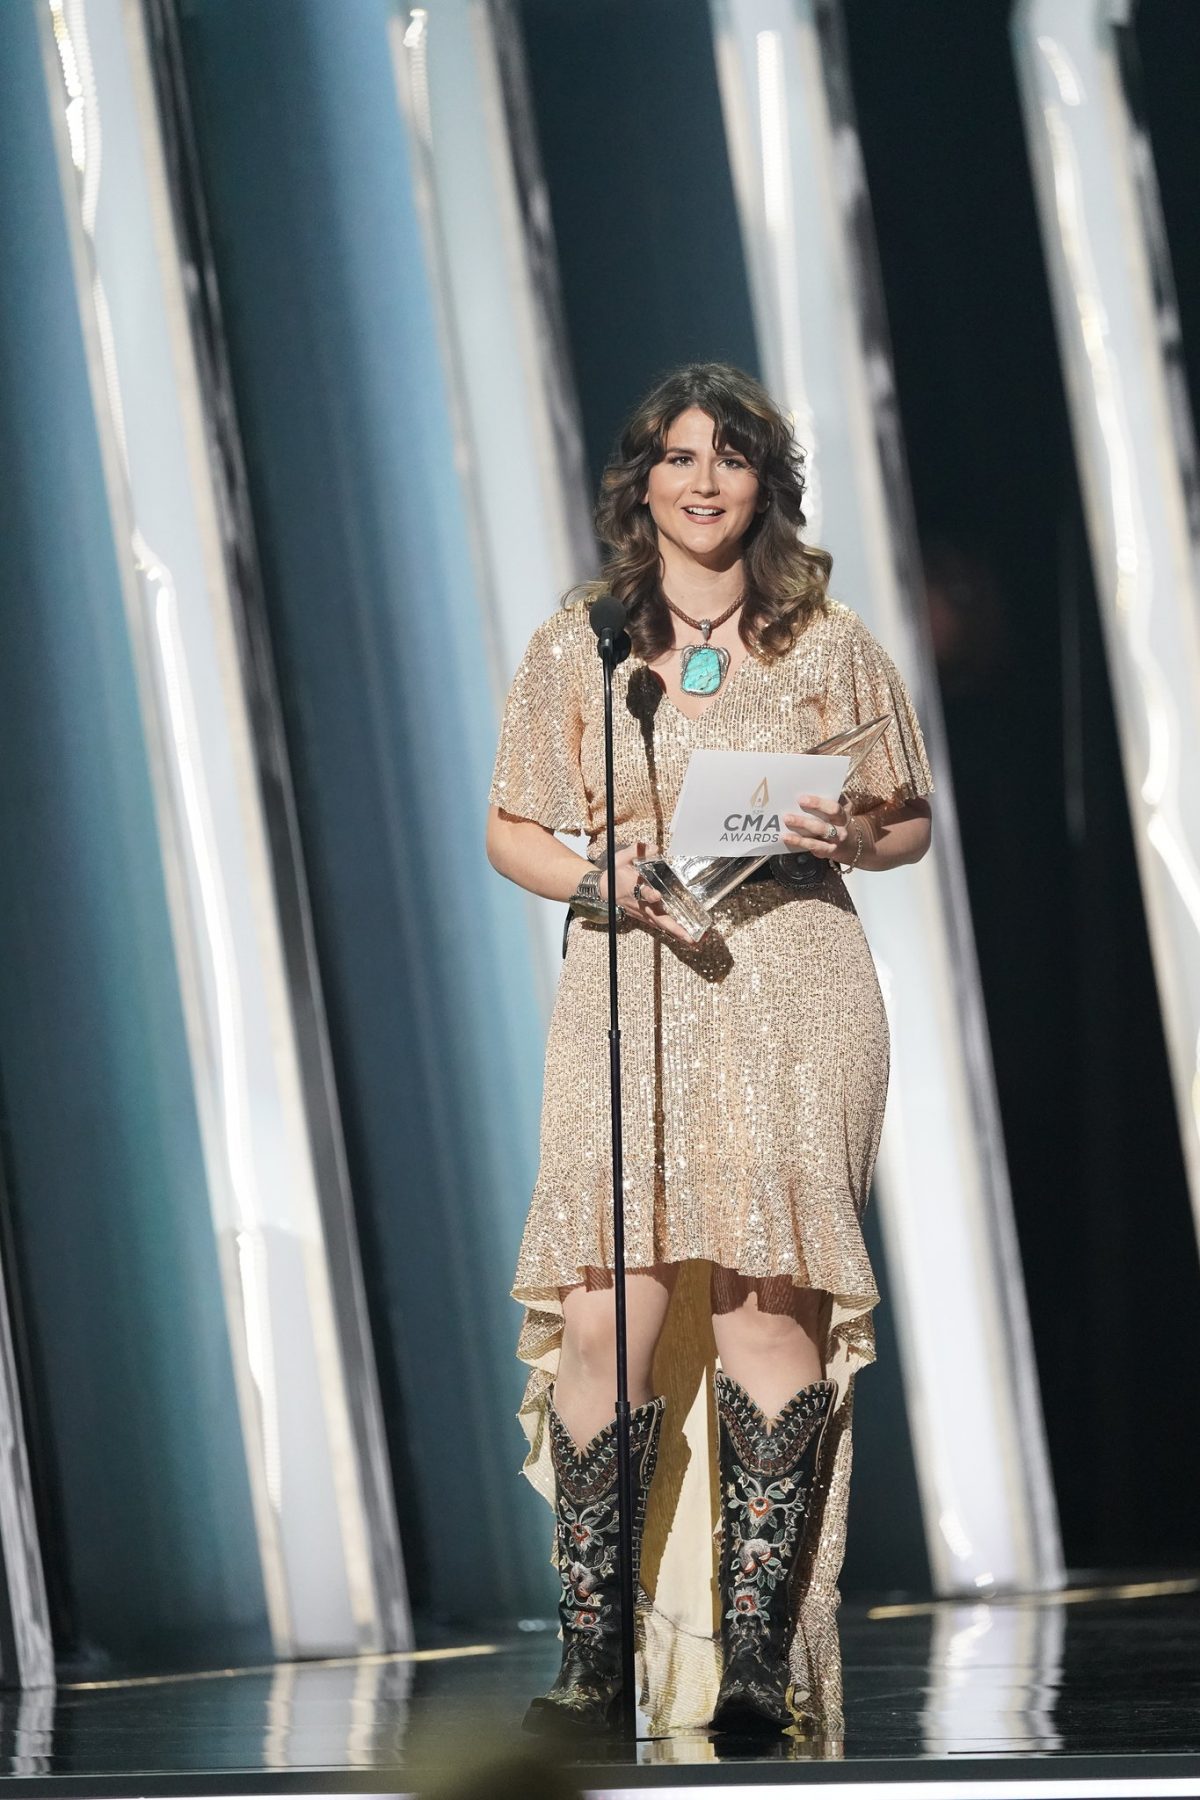 Jenee Fleenor Readies New Music Following CMA Musician of the Year Win